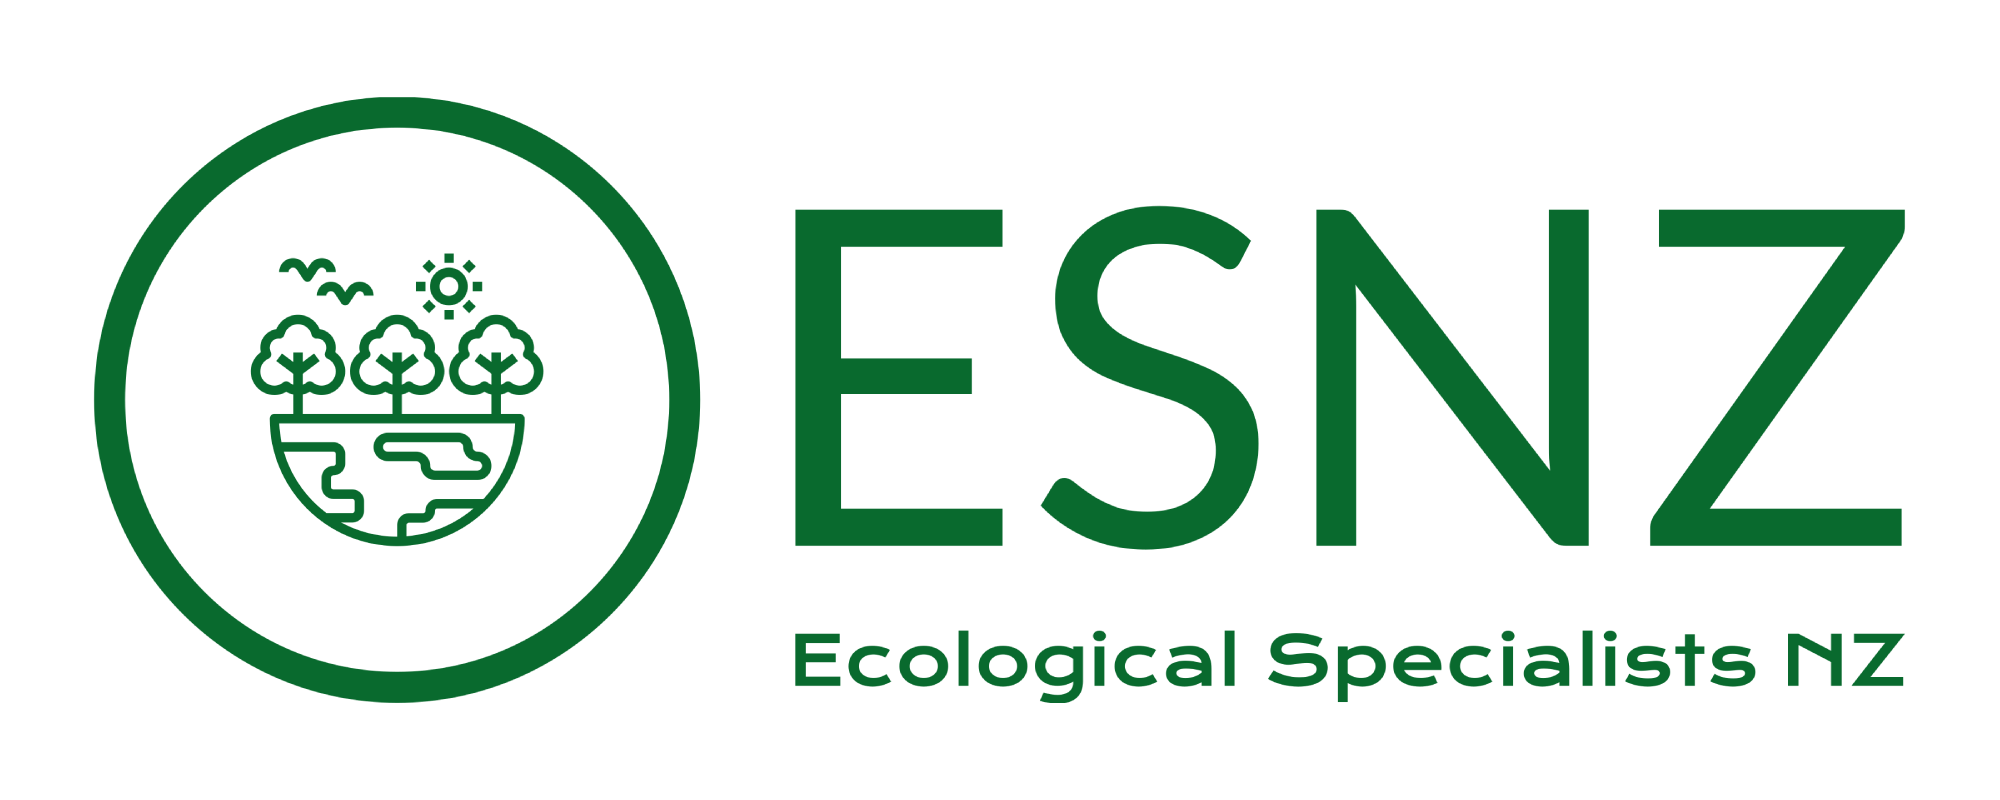 Ecological Specialists New Zealand Logo